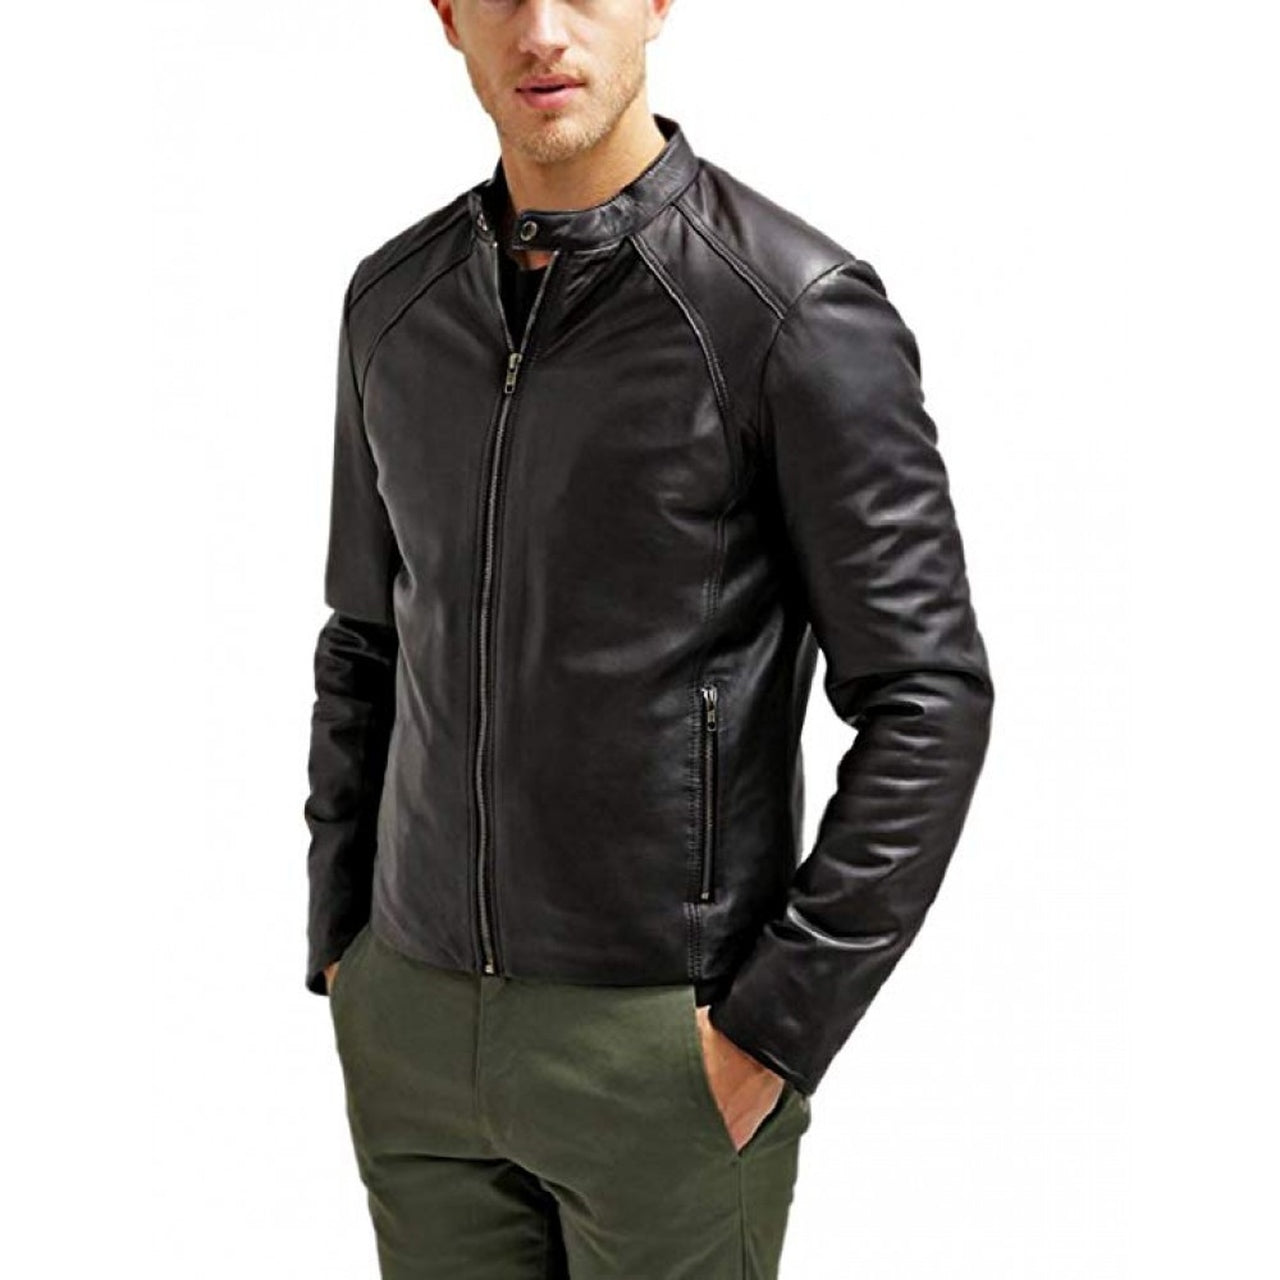 Jaxx Real Leather Biker Jacket In Black - Leather Jacket